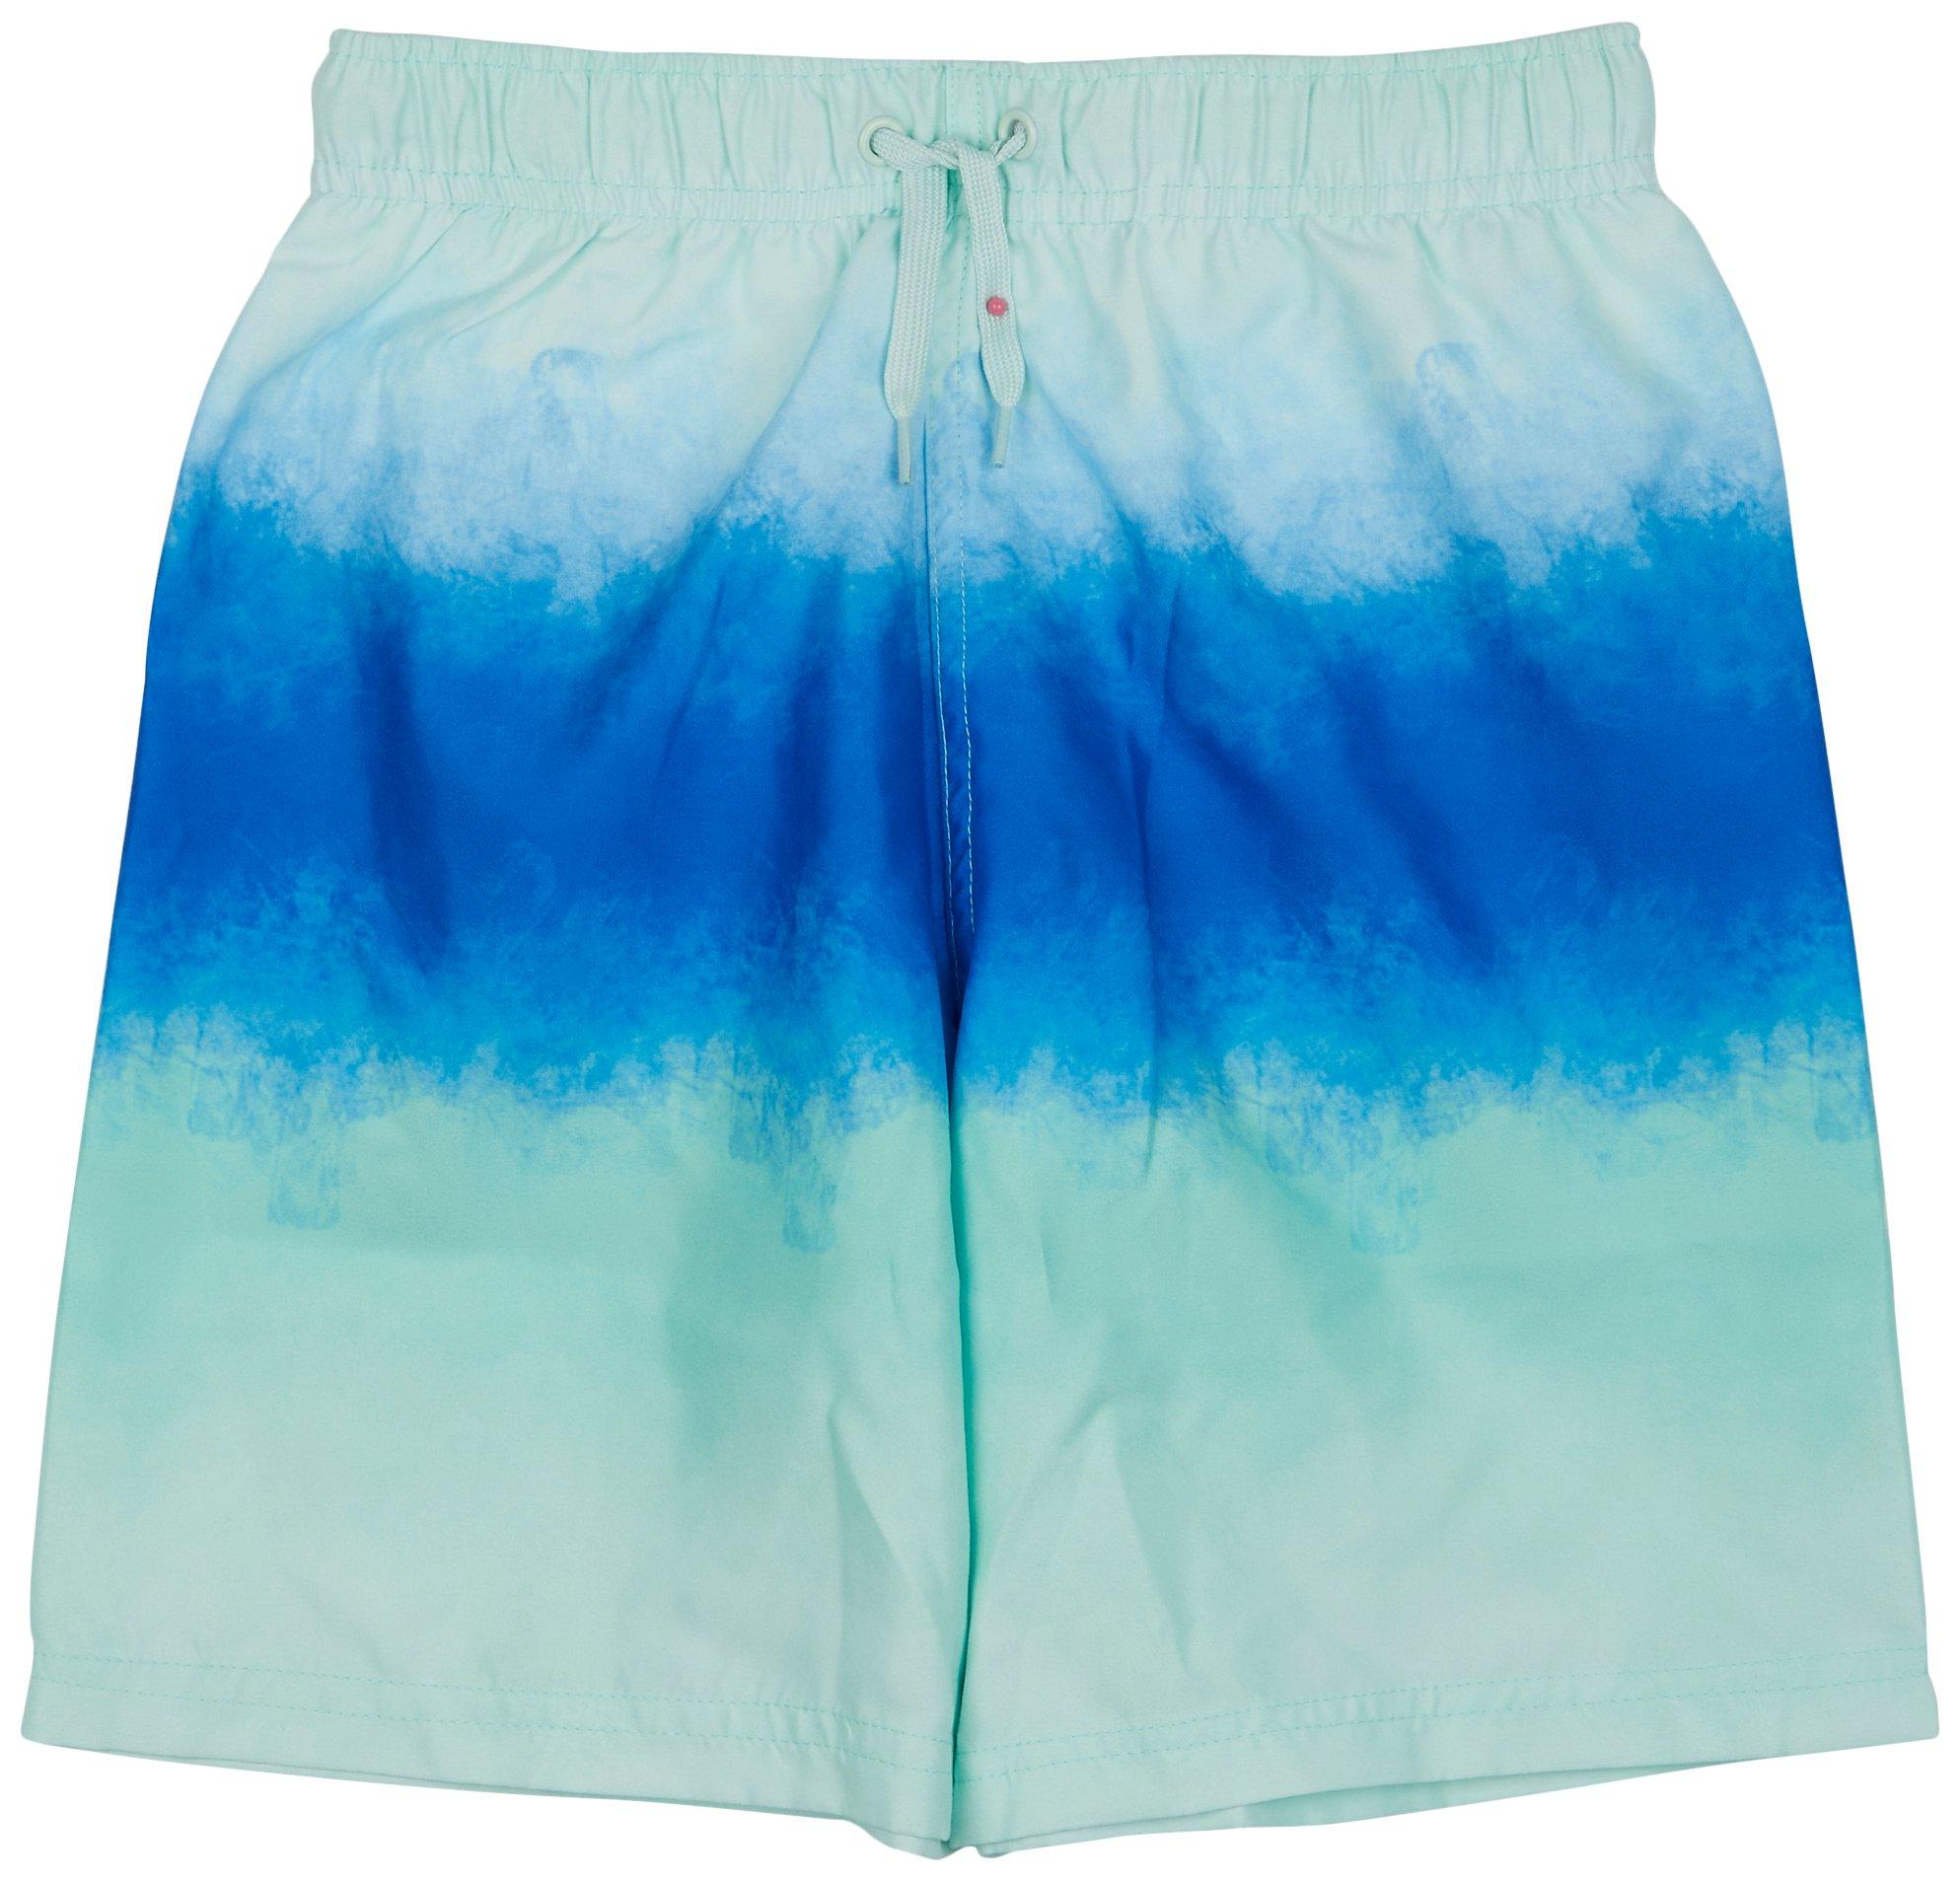 Big Boys Ombre Blue Print Swimsuit Shorts